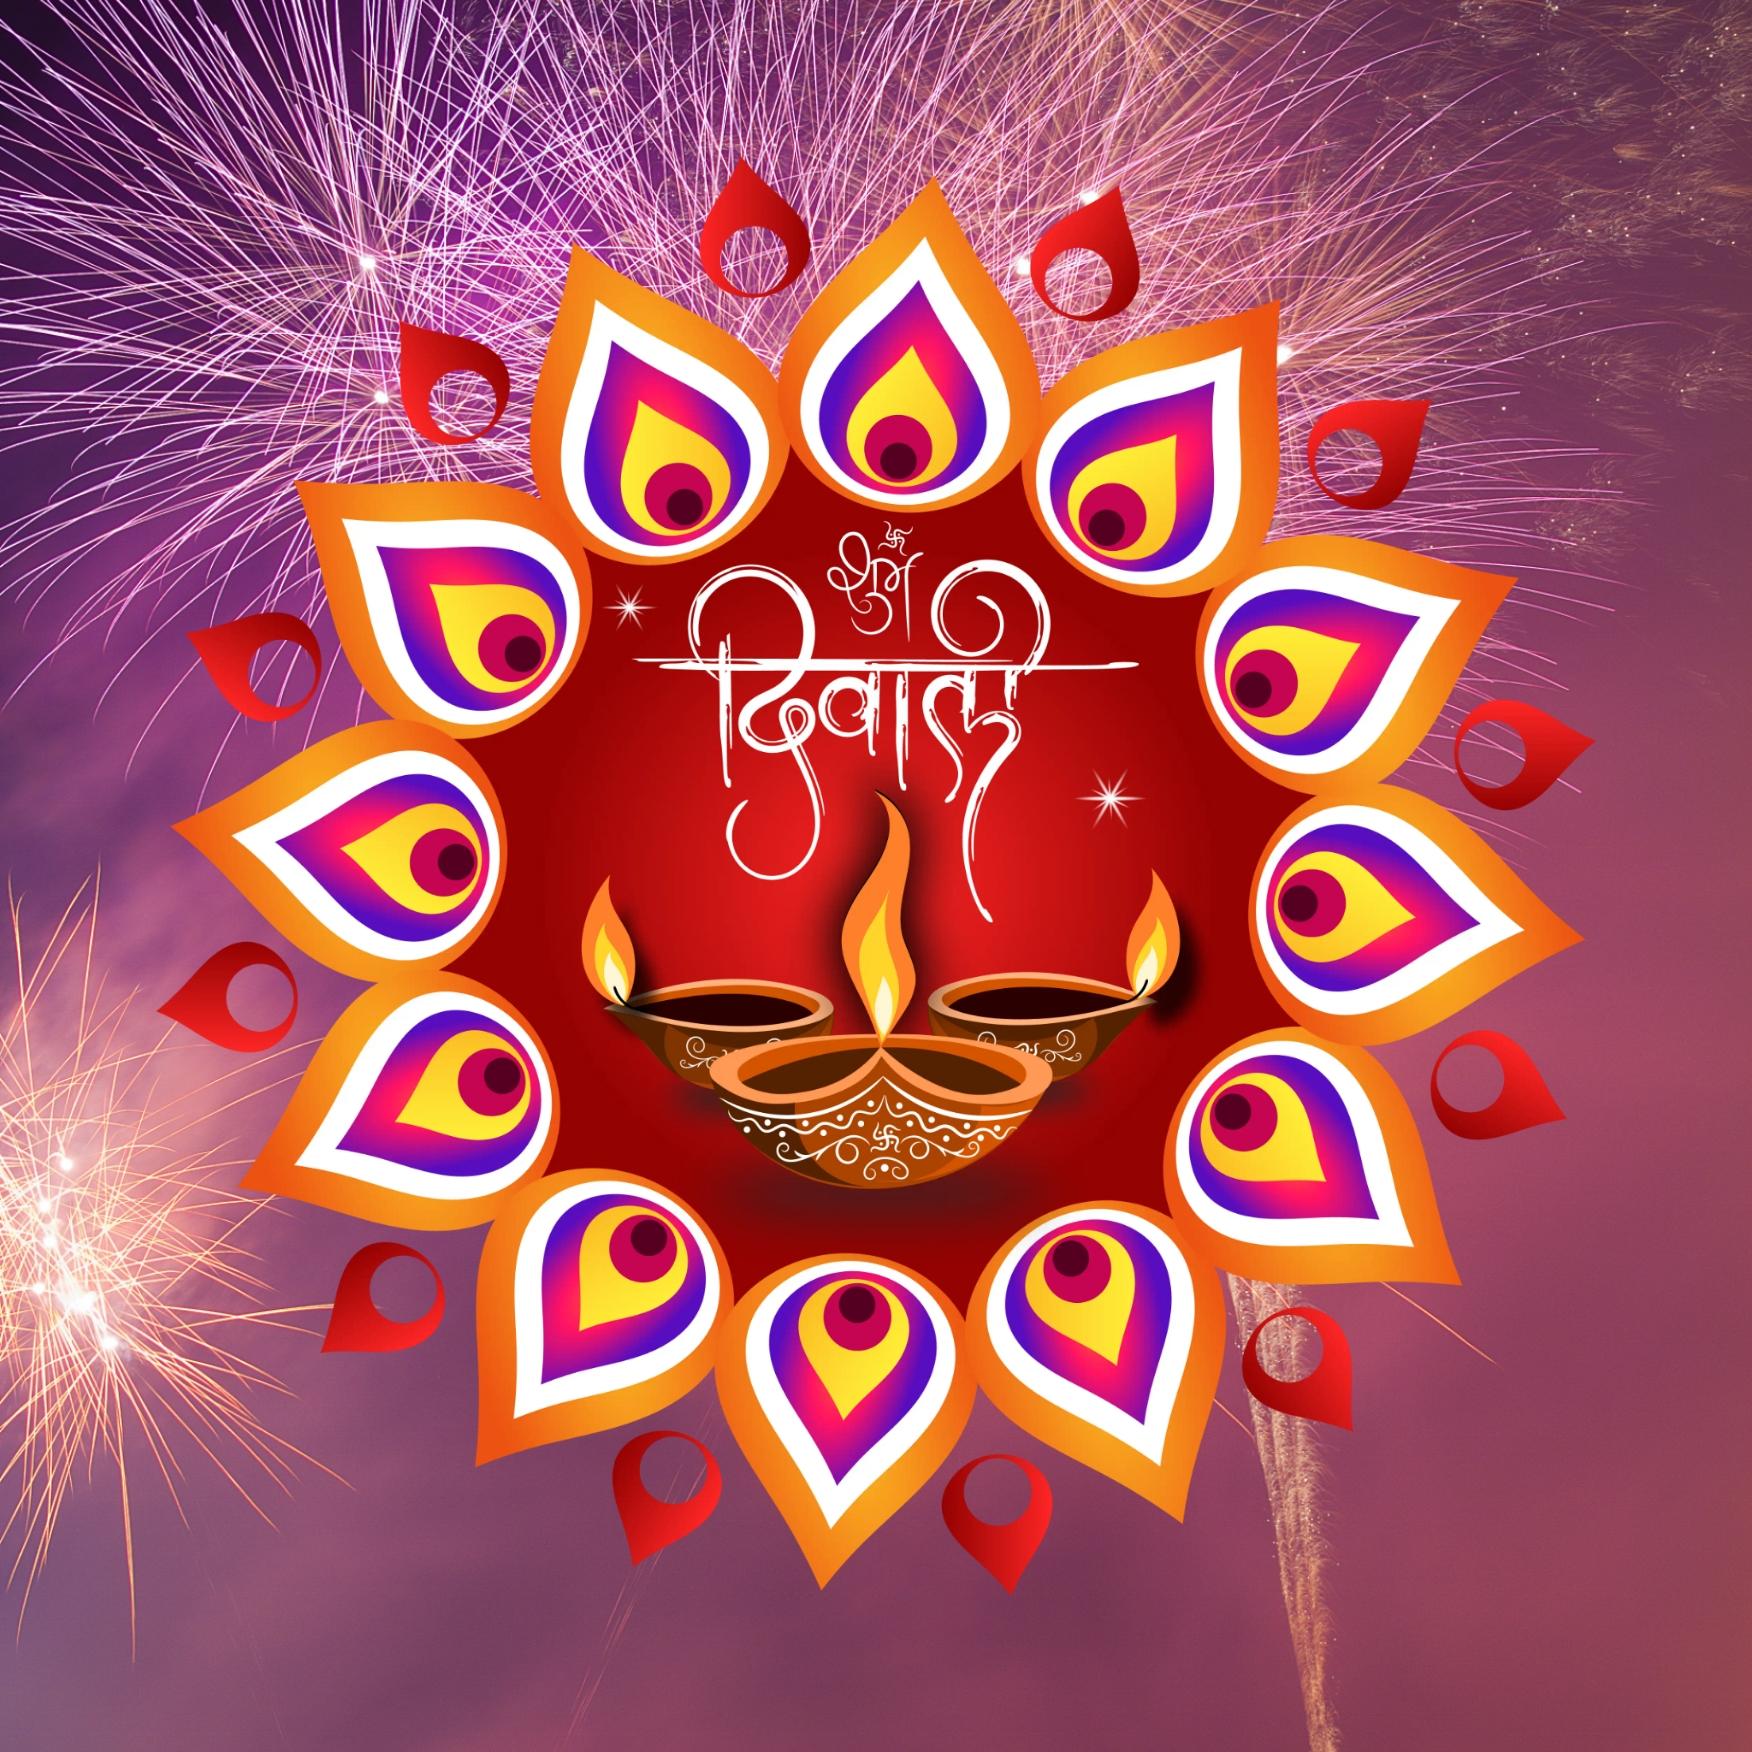 Shubh Diwali Images in Hindi